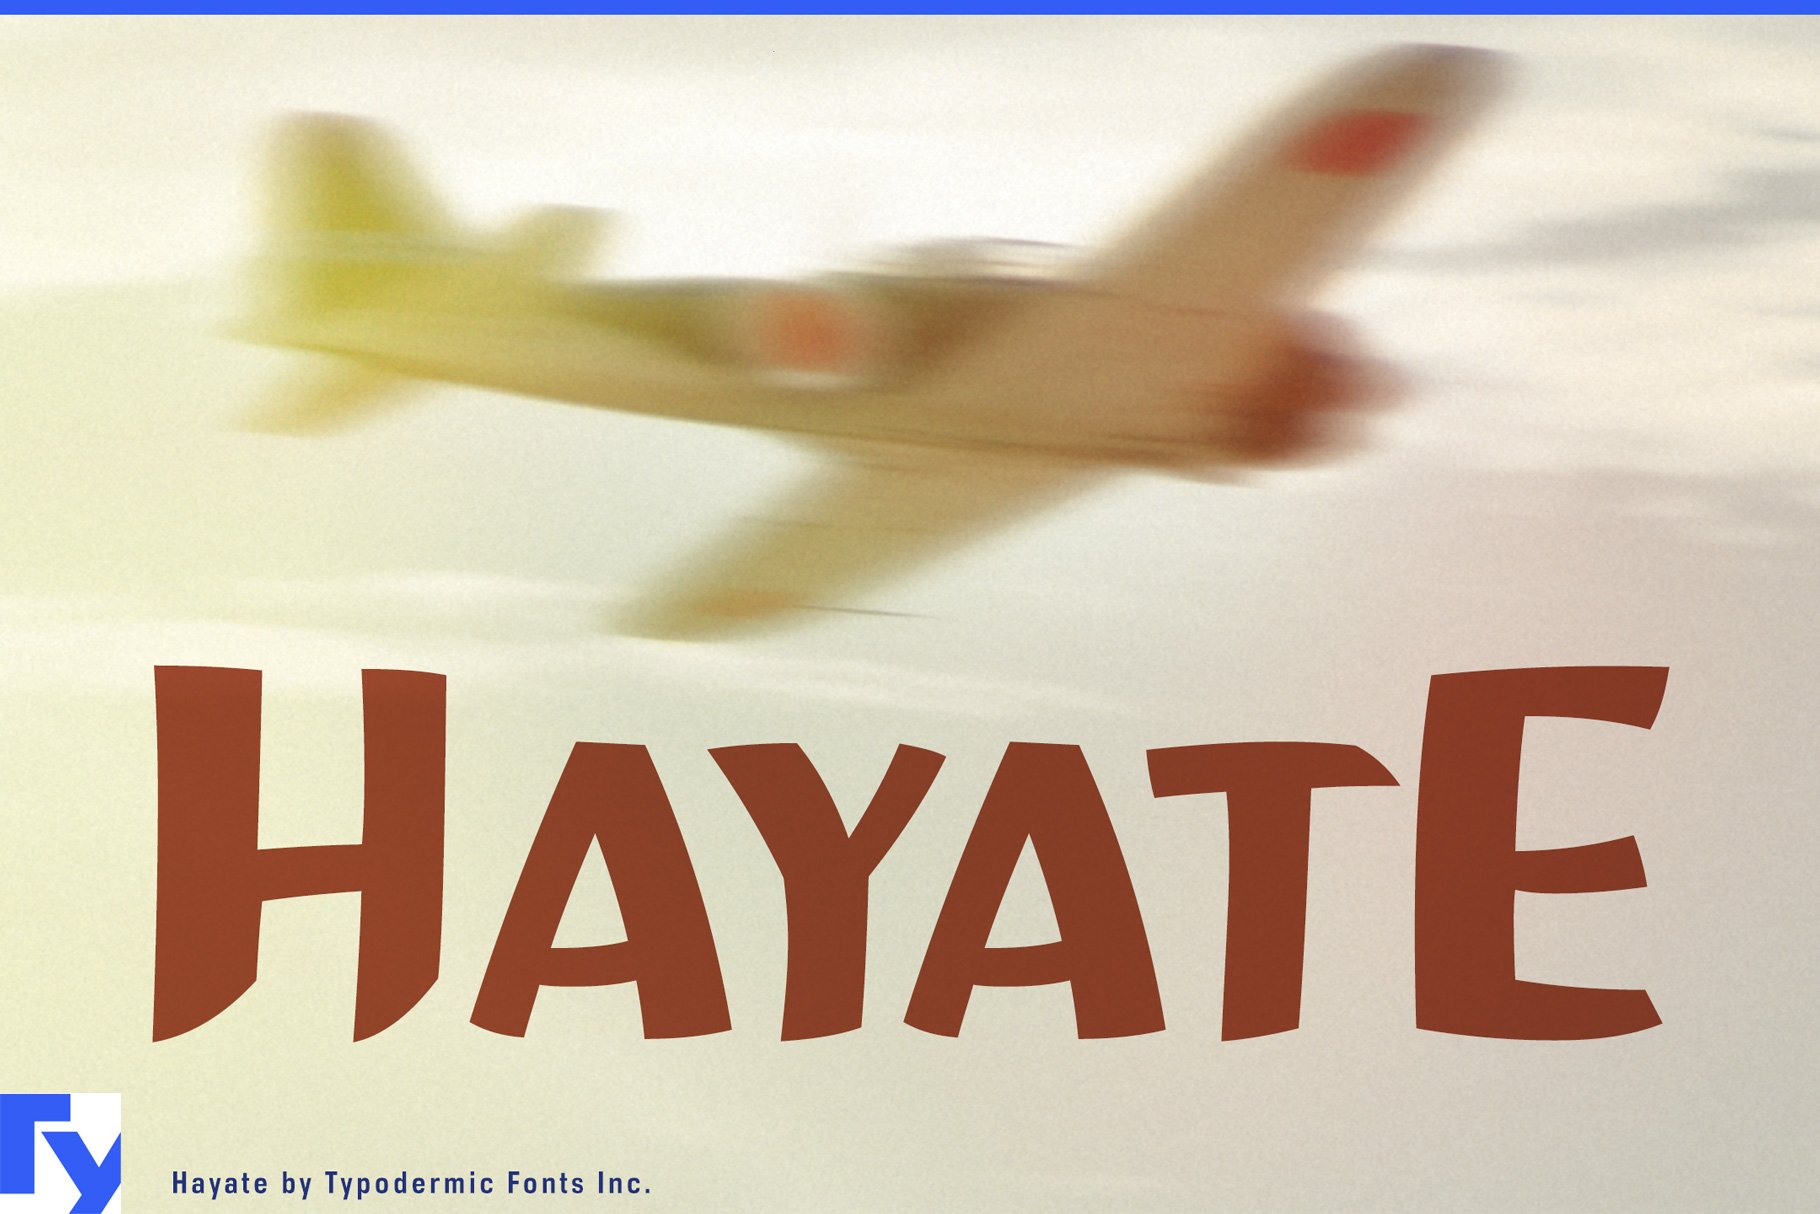 Hayate cover image.